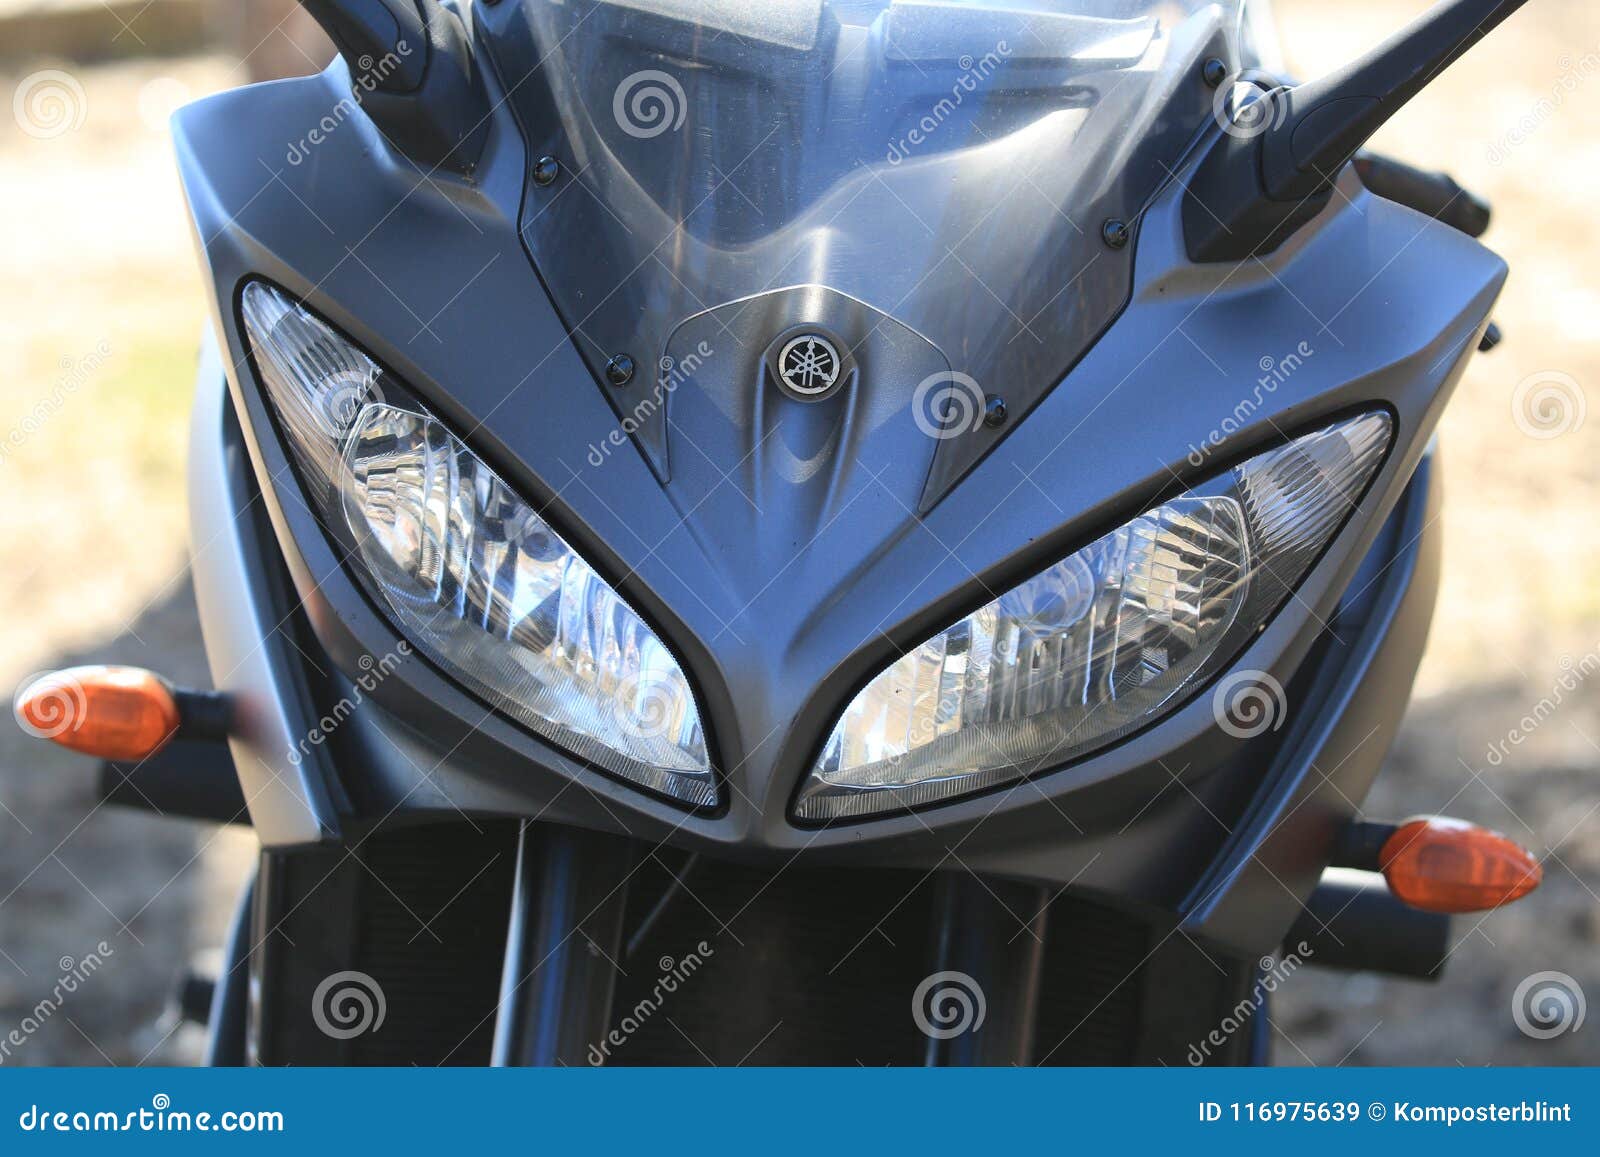 Kawasaki Motorcycle. Front Fairing with Headlights and Turn Signals Editorial Stock - Image of black, 116975639